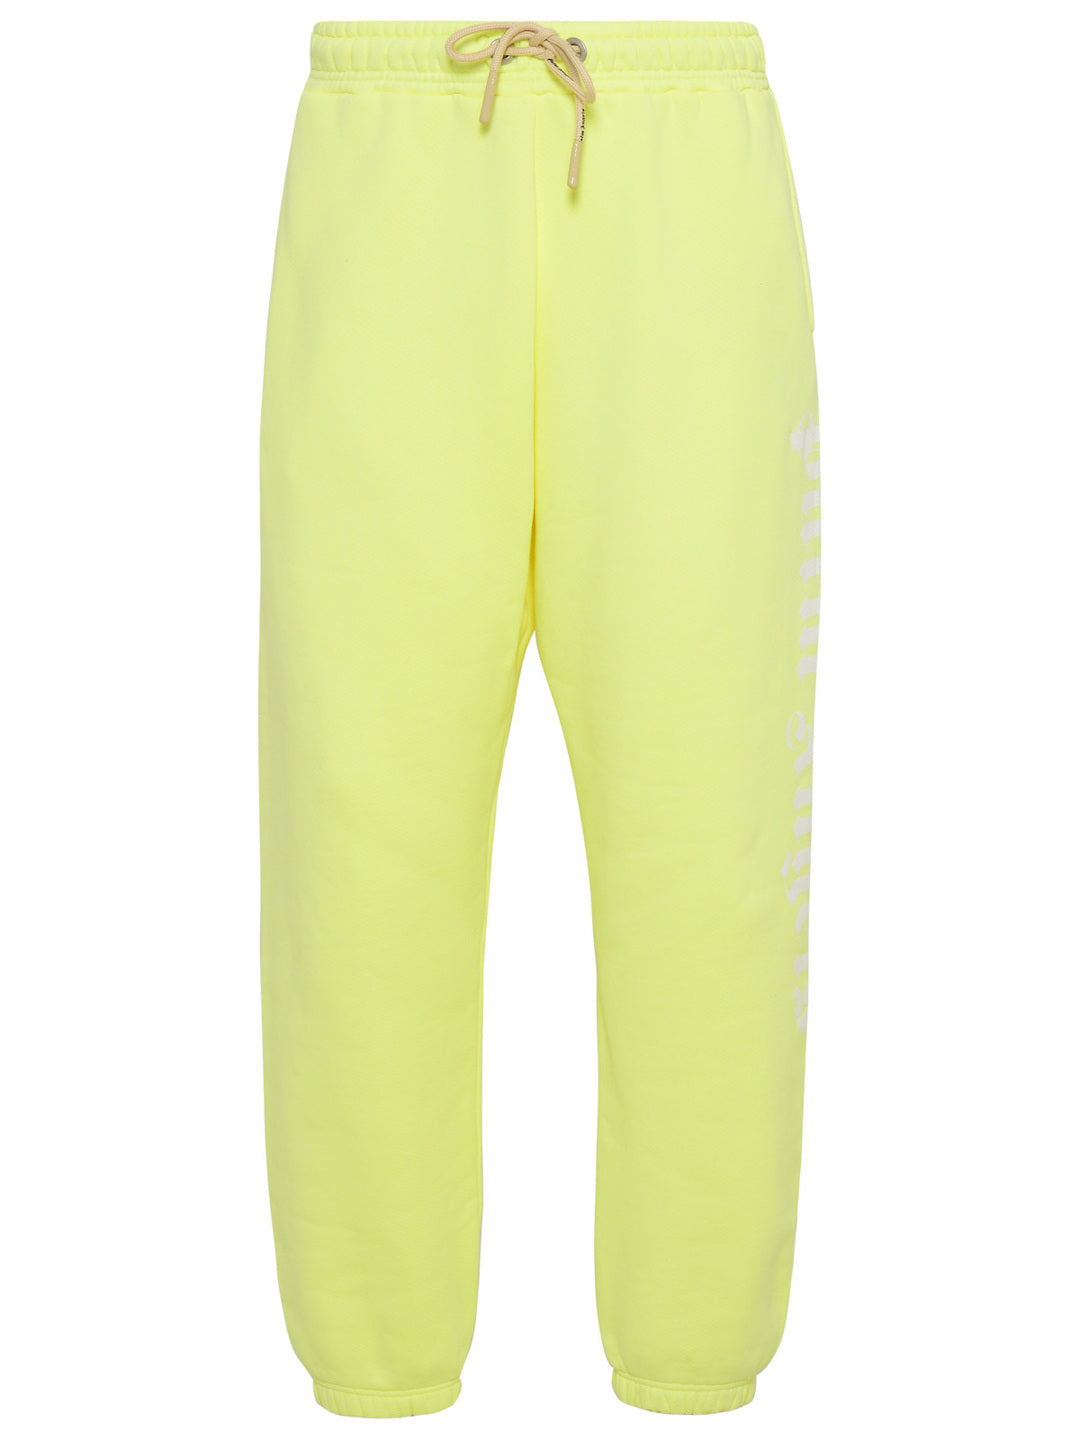 Palm Angels Man Neon Yellow Cotton Track Suit Pants